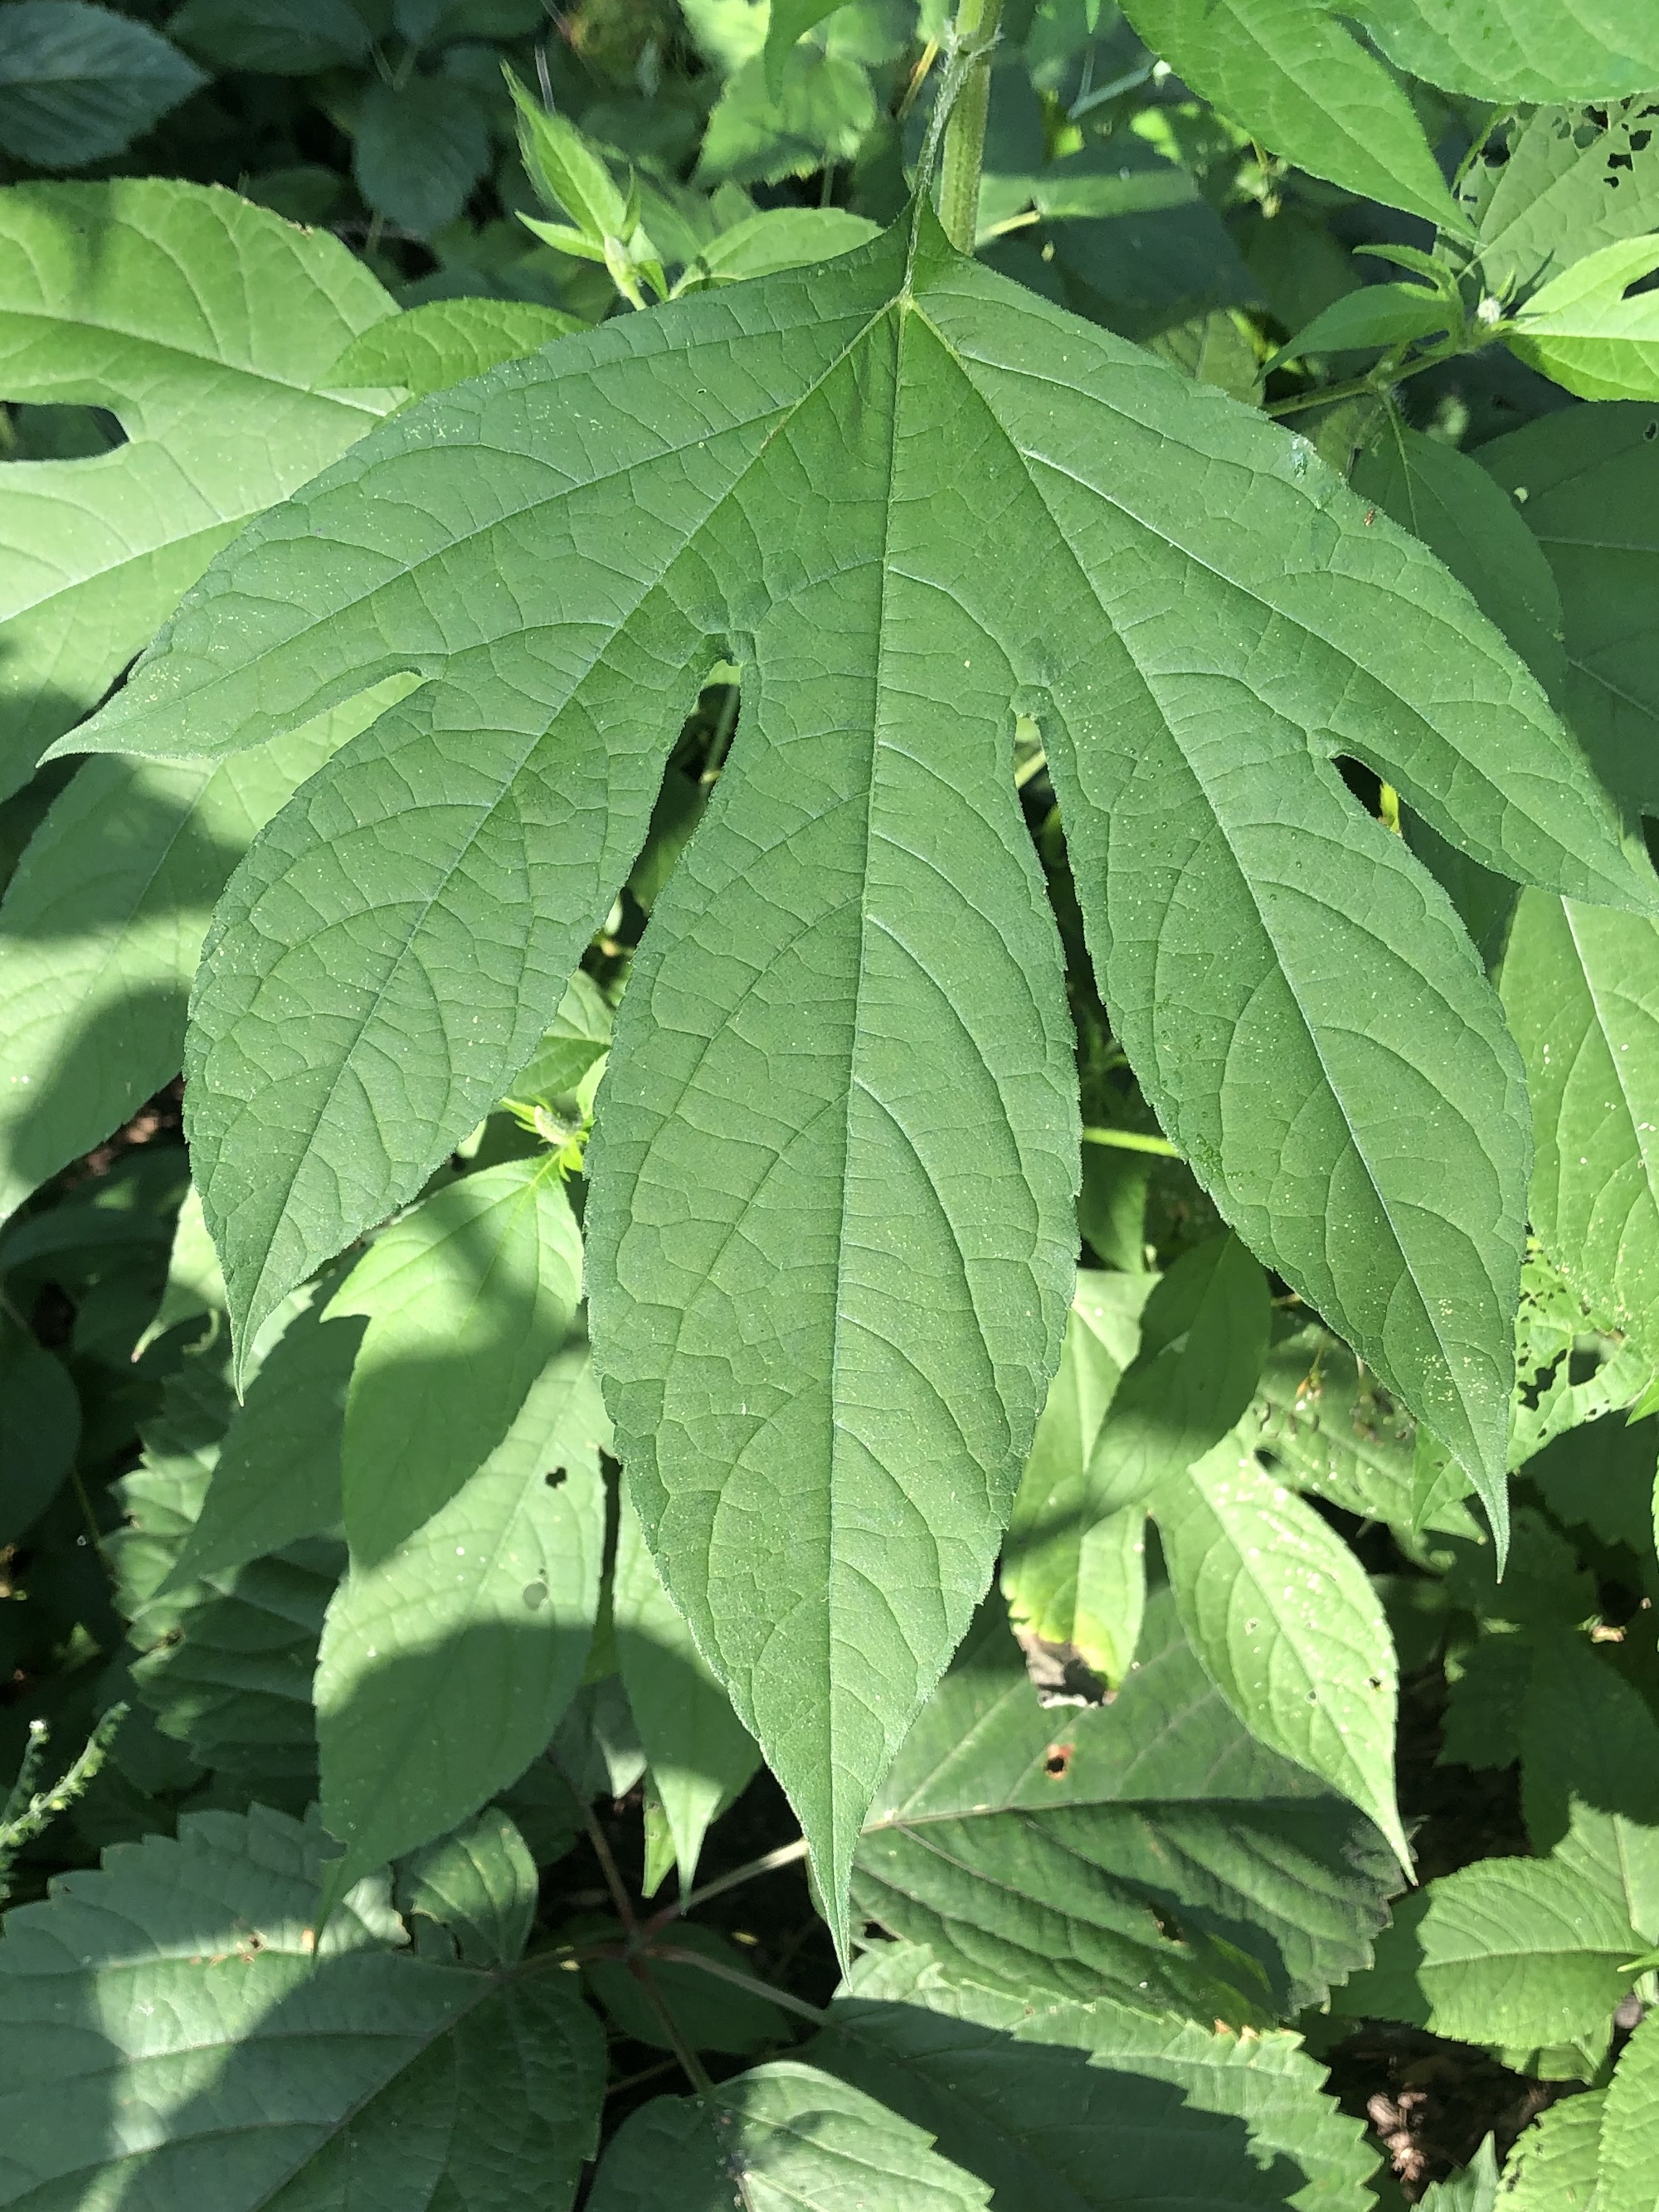 Giant Ragweed leaf in Oak Savanna in Madison, Wisconsin on August 16, 2022.